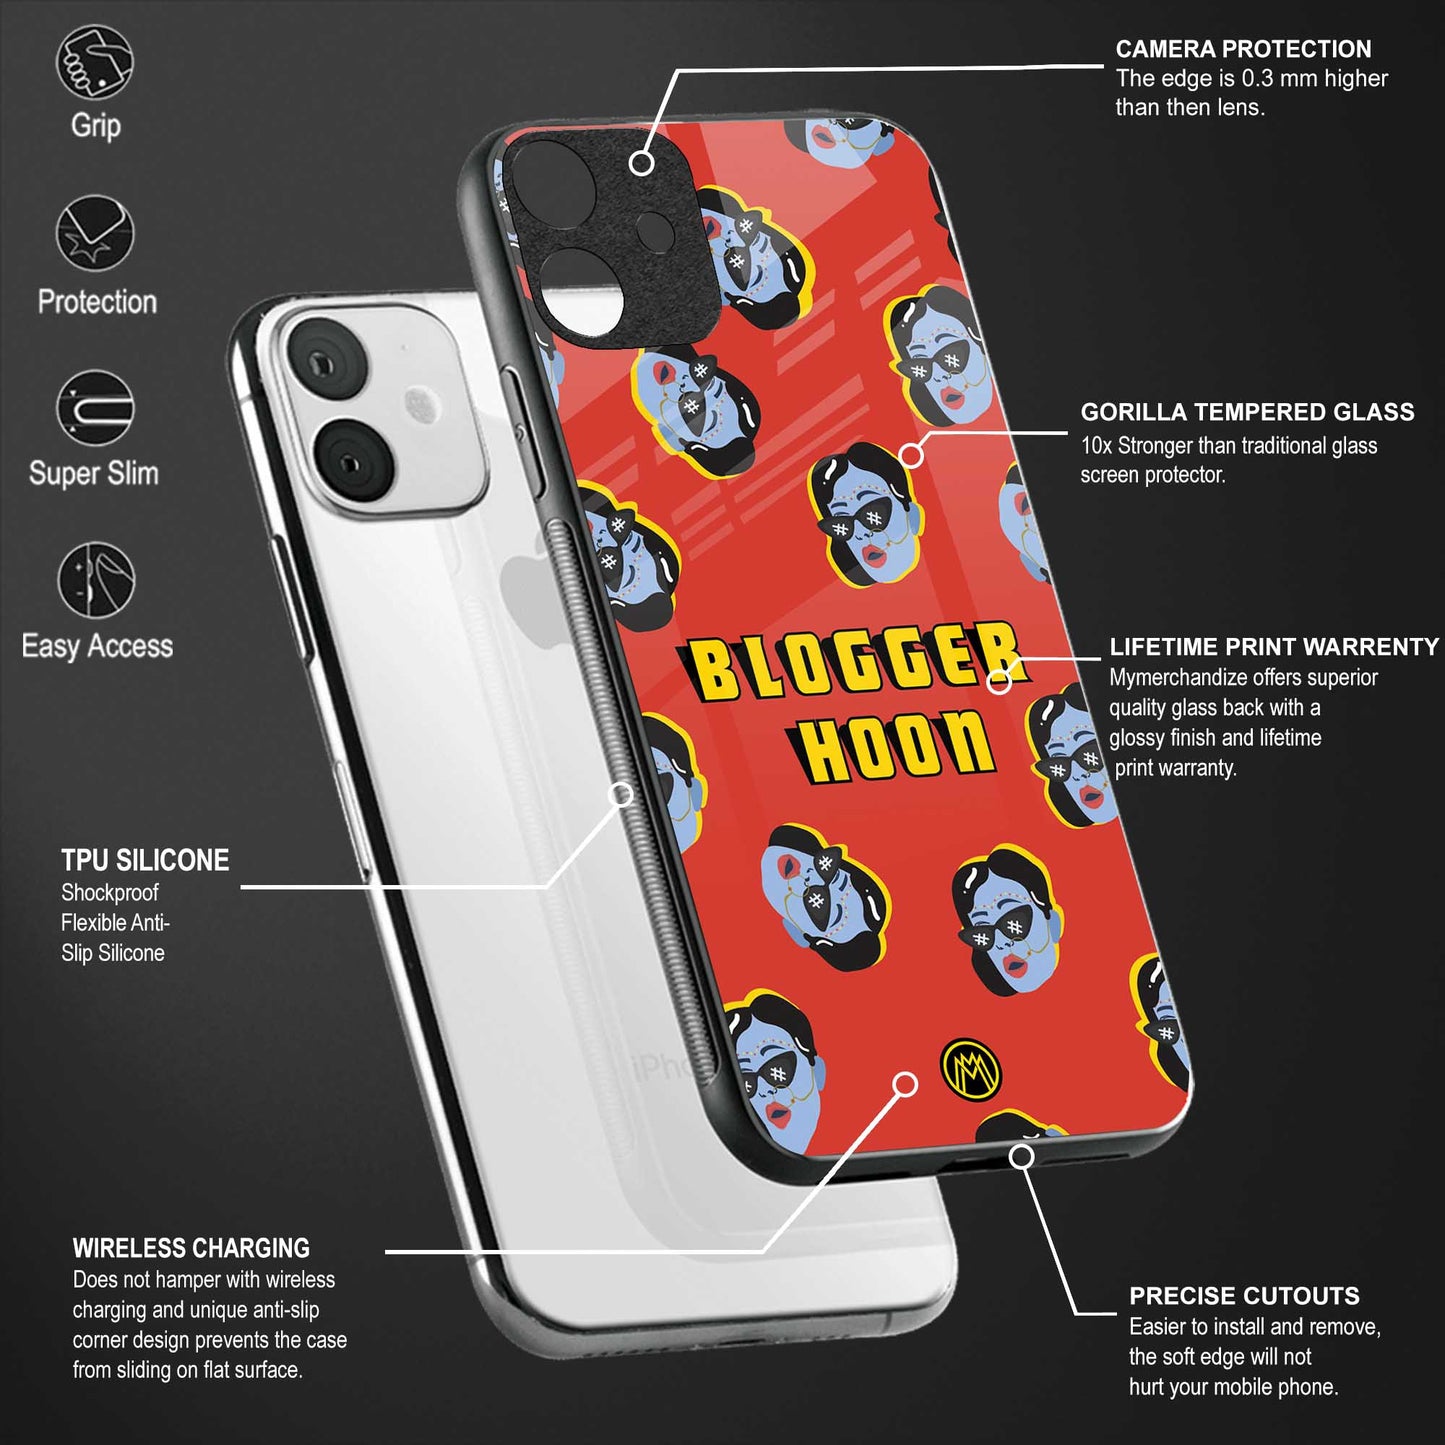 blogger hoon back phone cover | glass case for samsun galaxy a24 4g